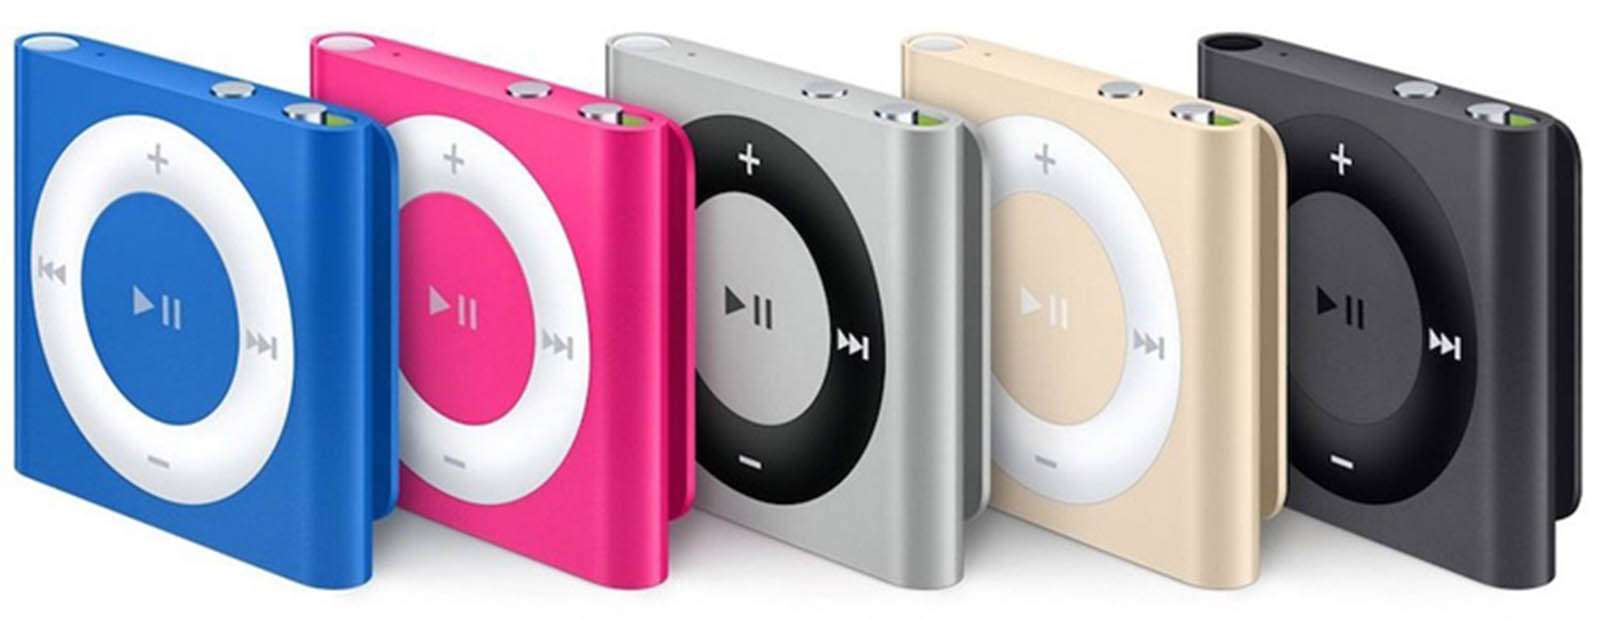 iPod компании Apple